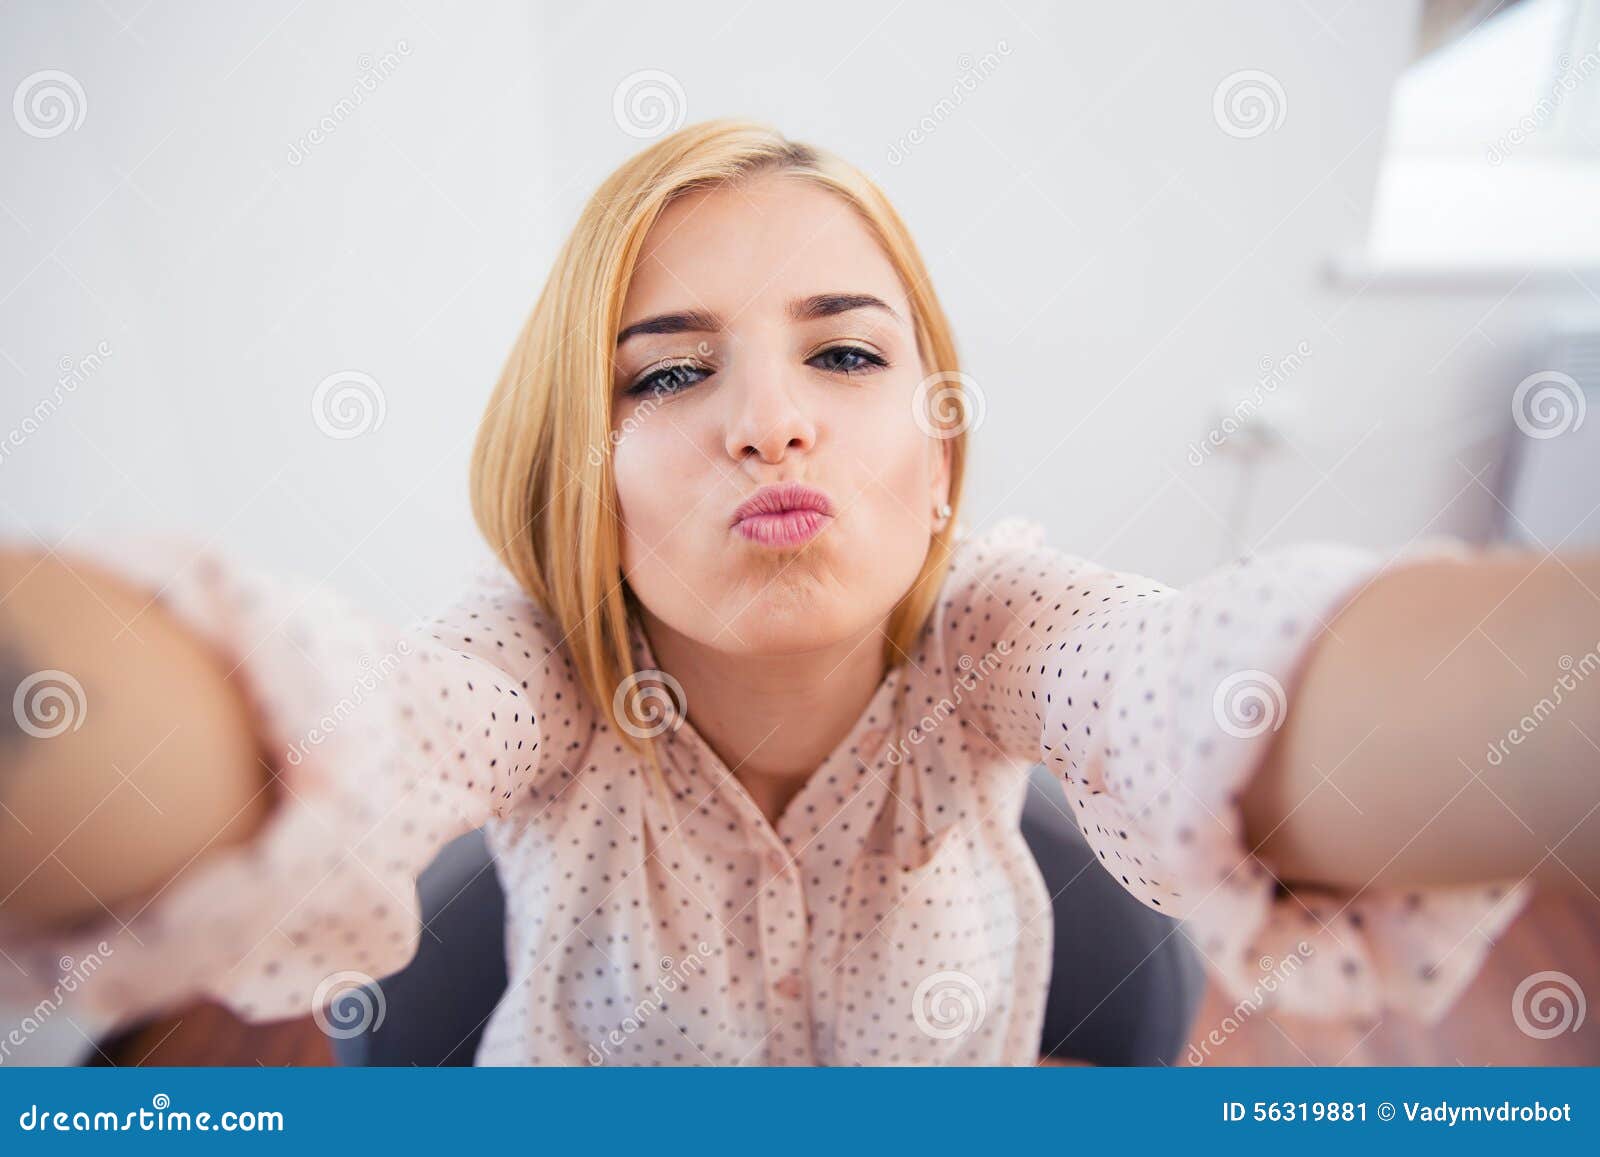 woman kissing selfie